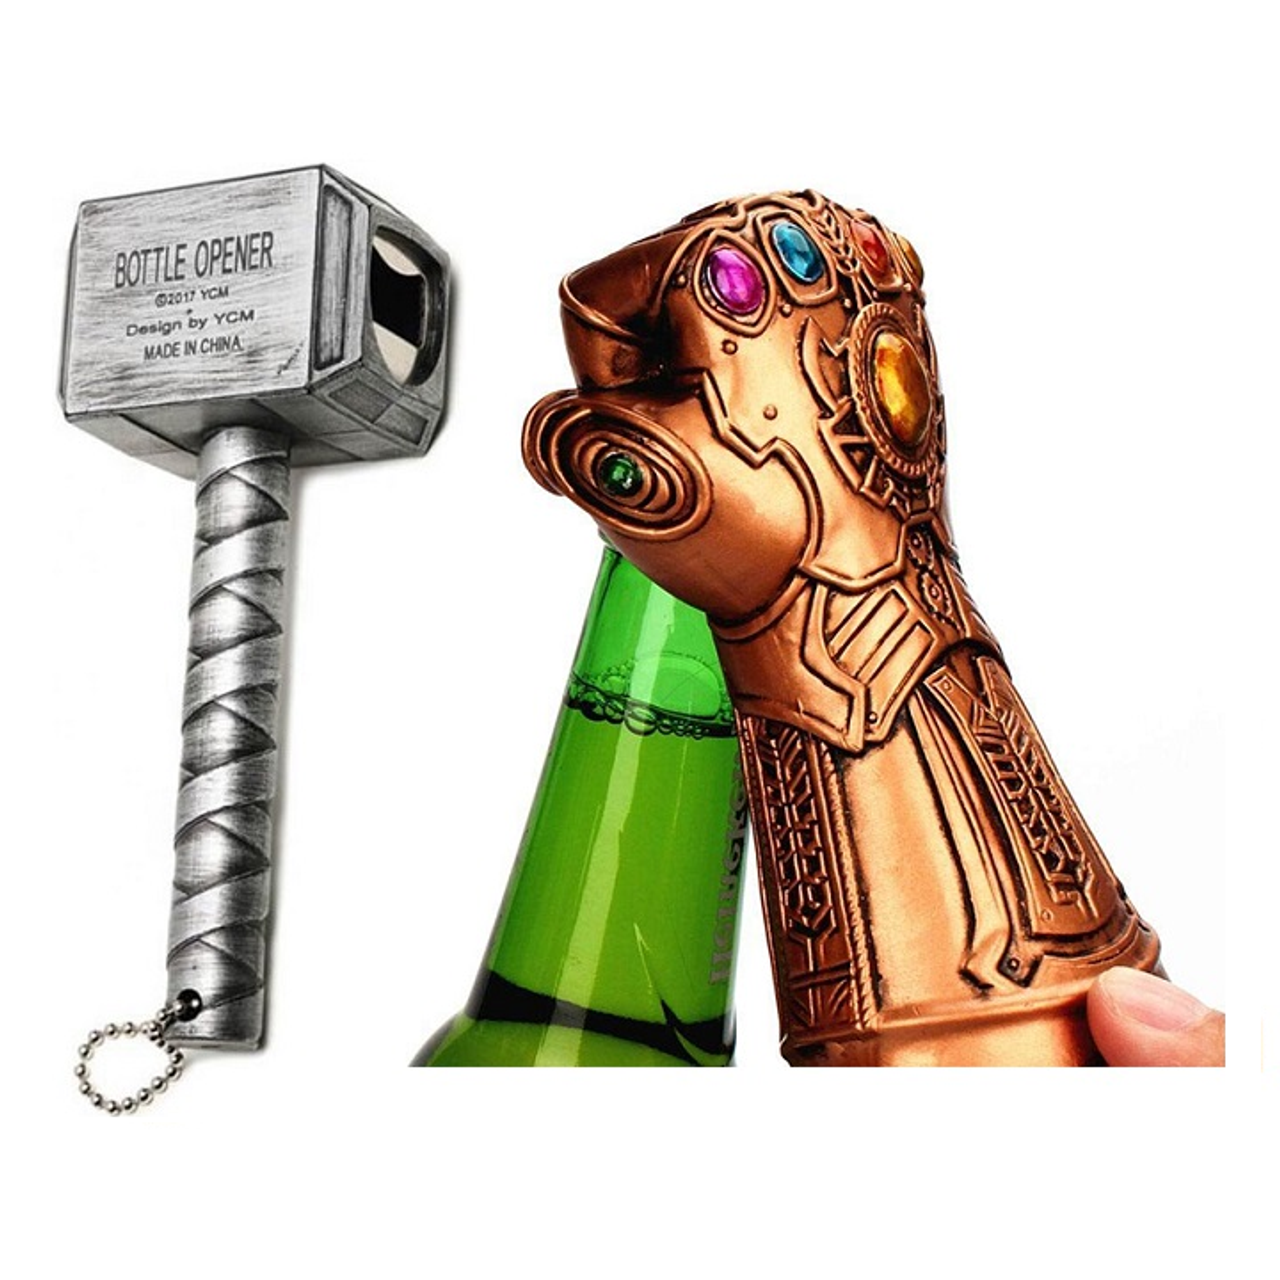 Avengers Bottle Opener product image